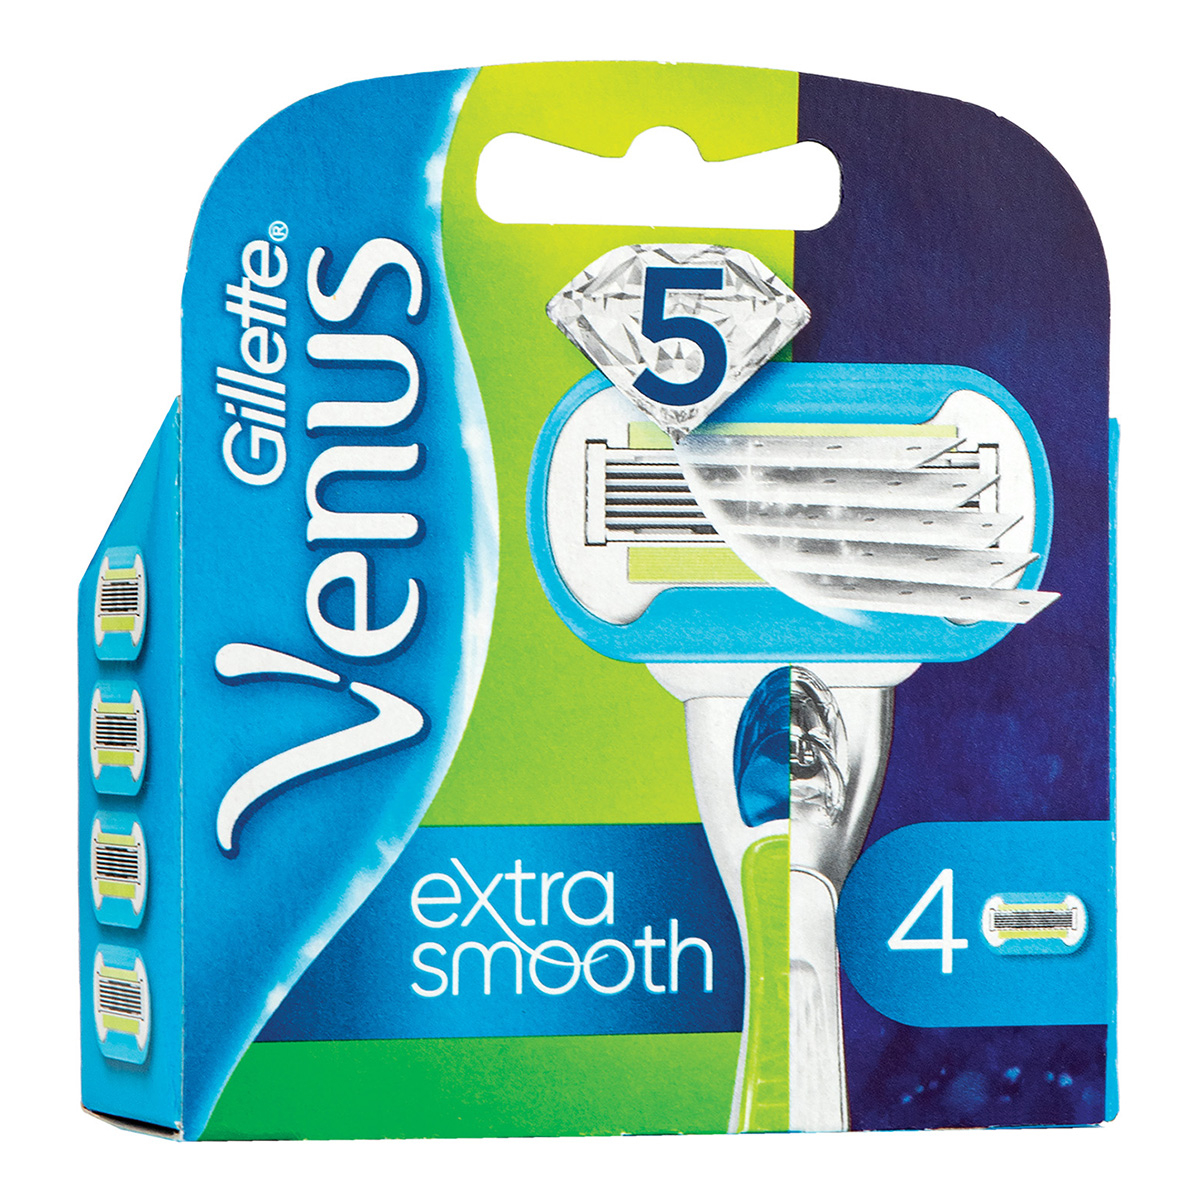 Gillette Venus Extra Smooth Refill Razor Blades - 4 Pack